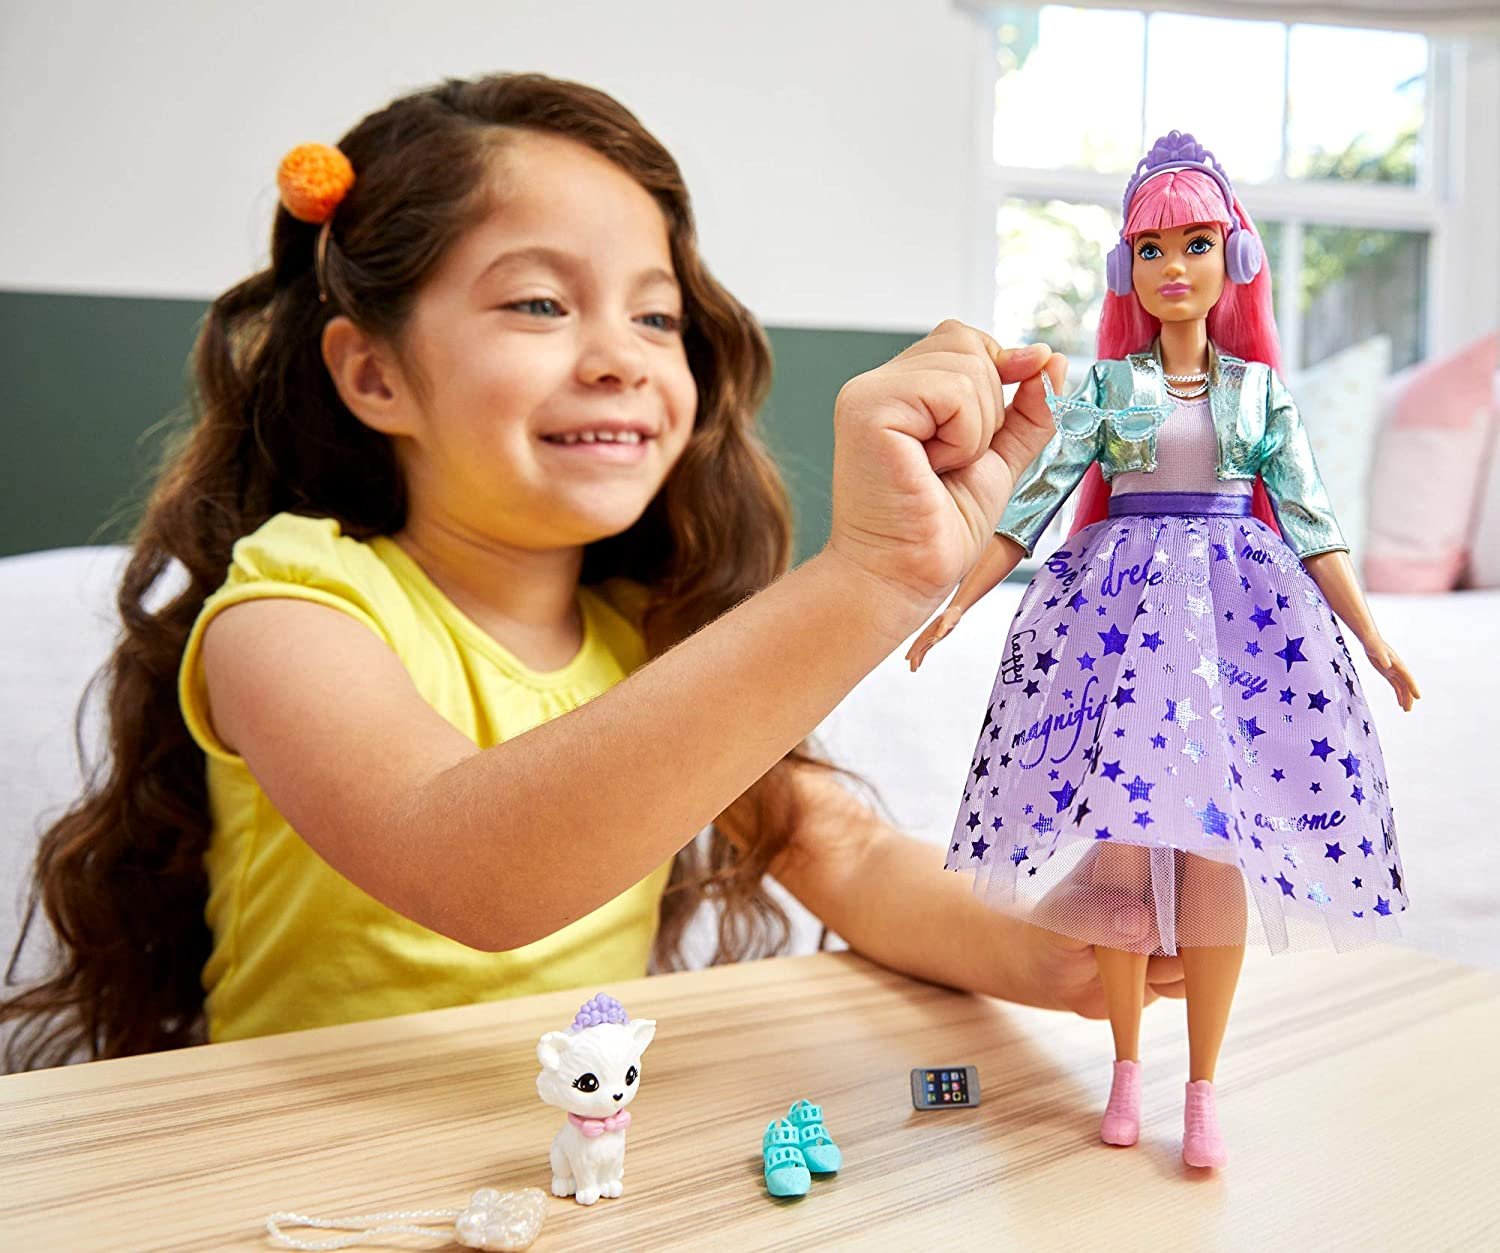 Mattel - Barbie Daisy Doll with Curvy Body & Pink Hair